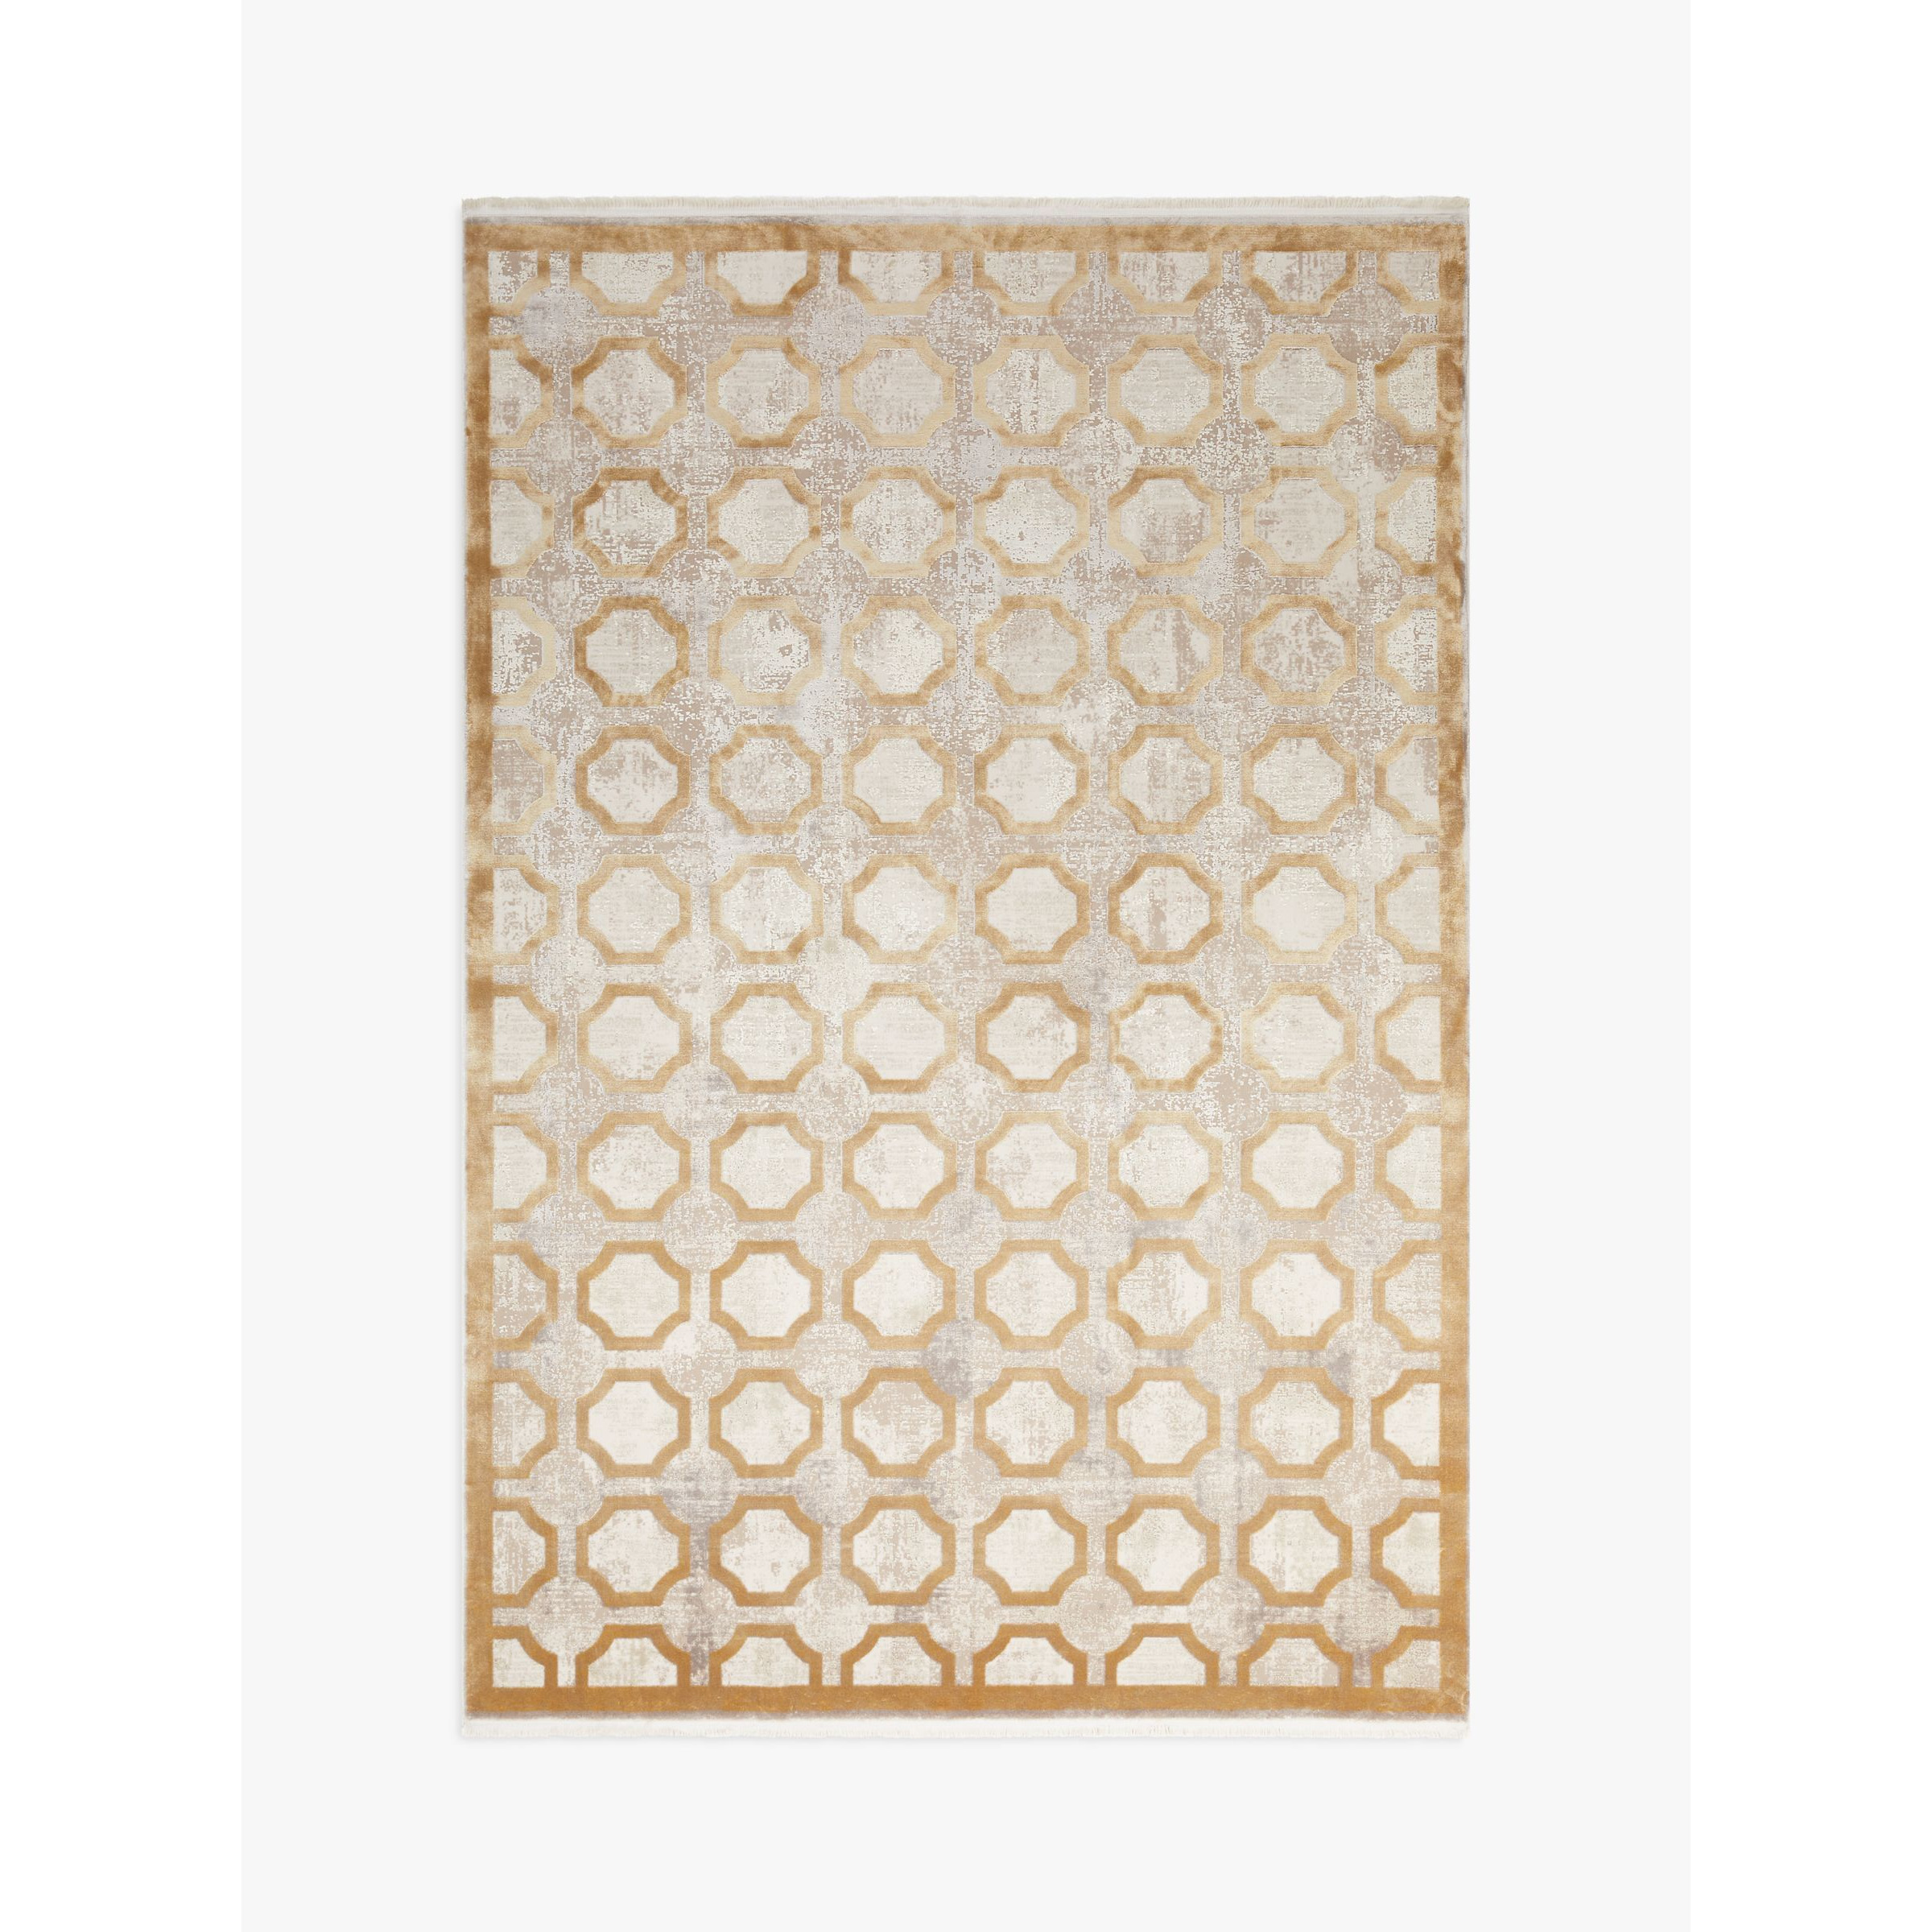 Gooch Luxury Distressed Mosaic Rug, Gold - image 1